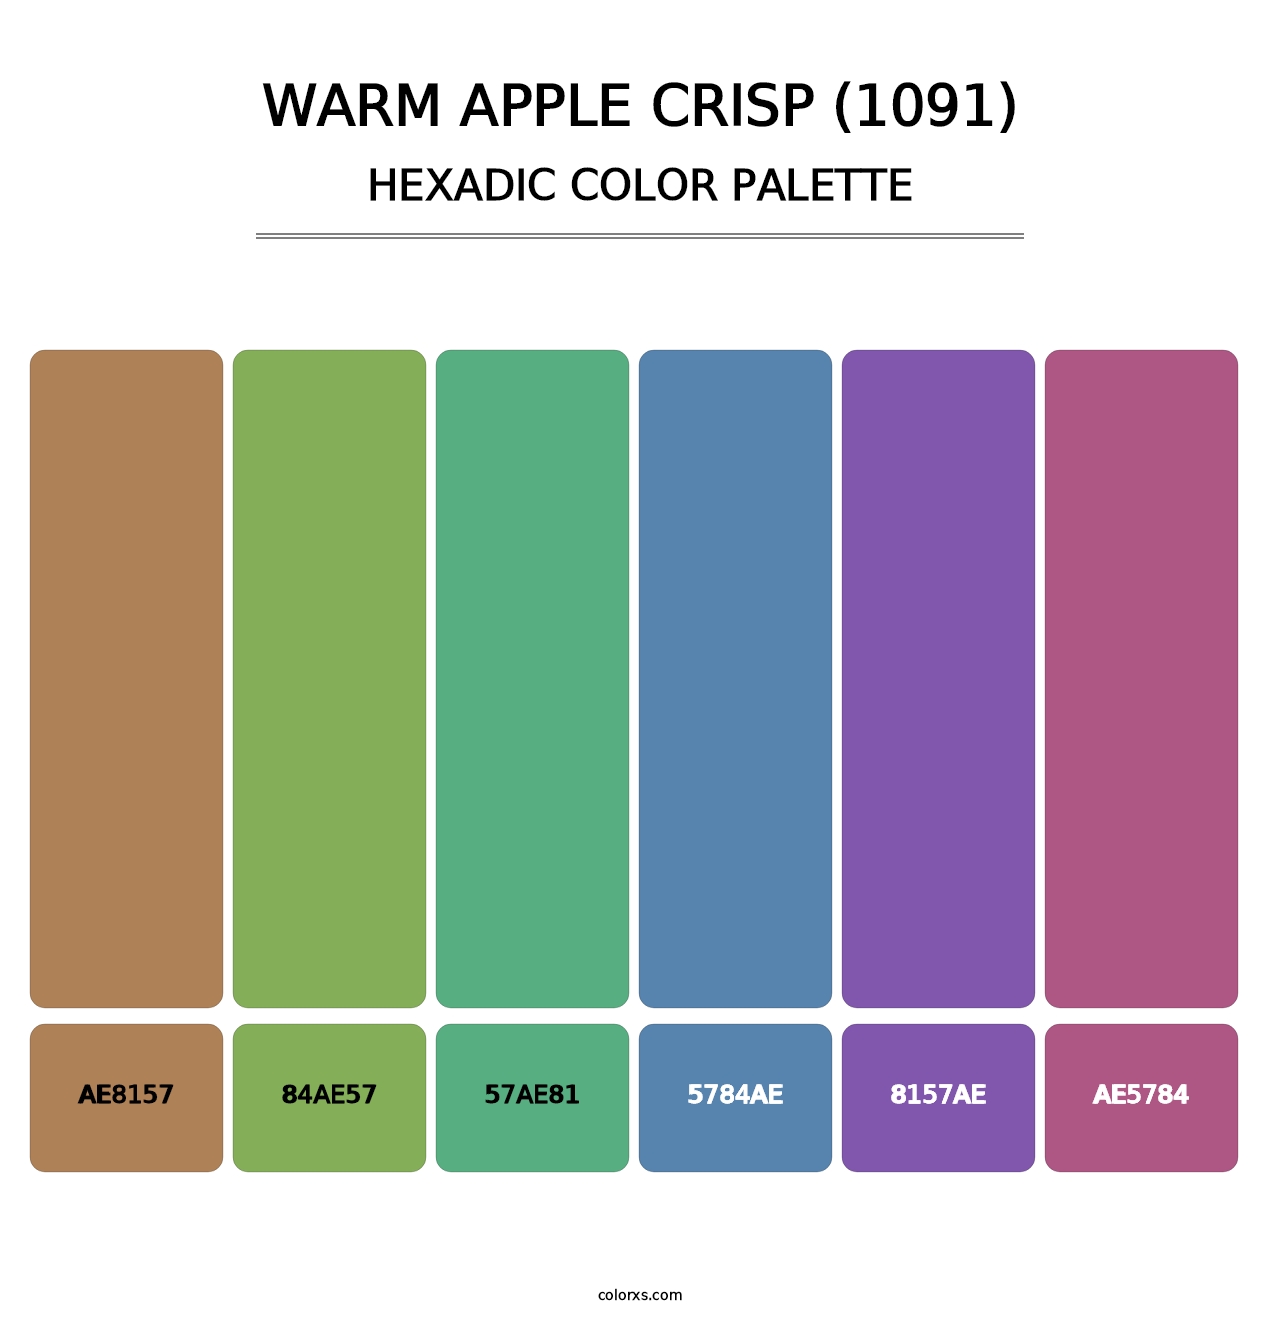 Warm Apple Crisp (1091) - Hexadic Color Palette